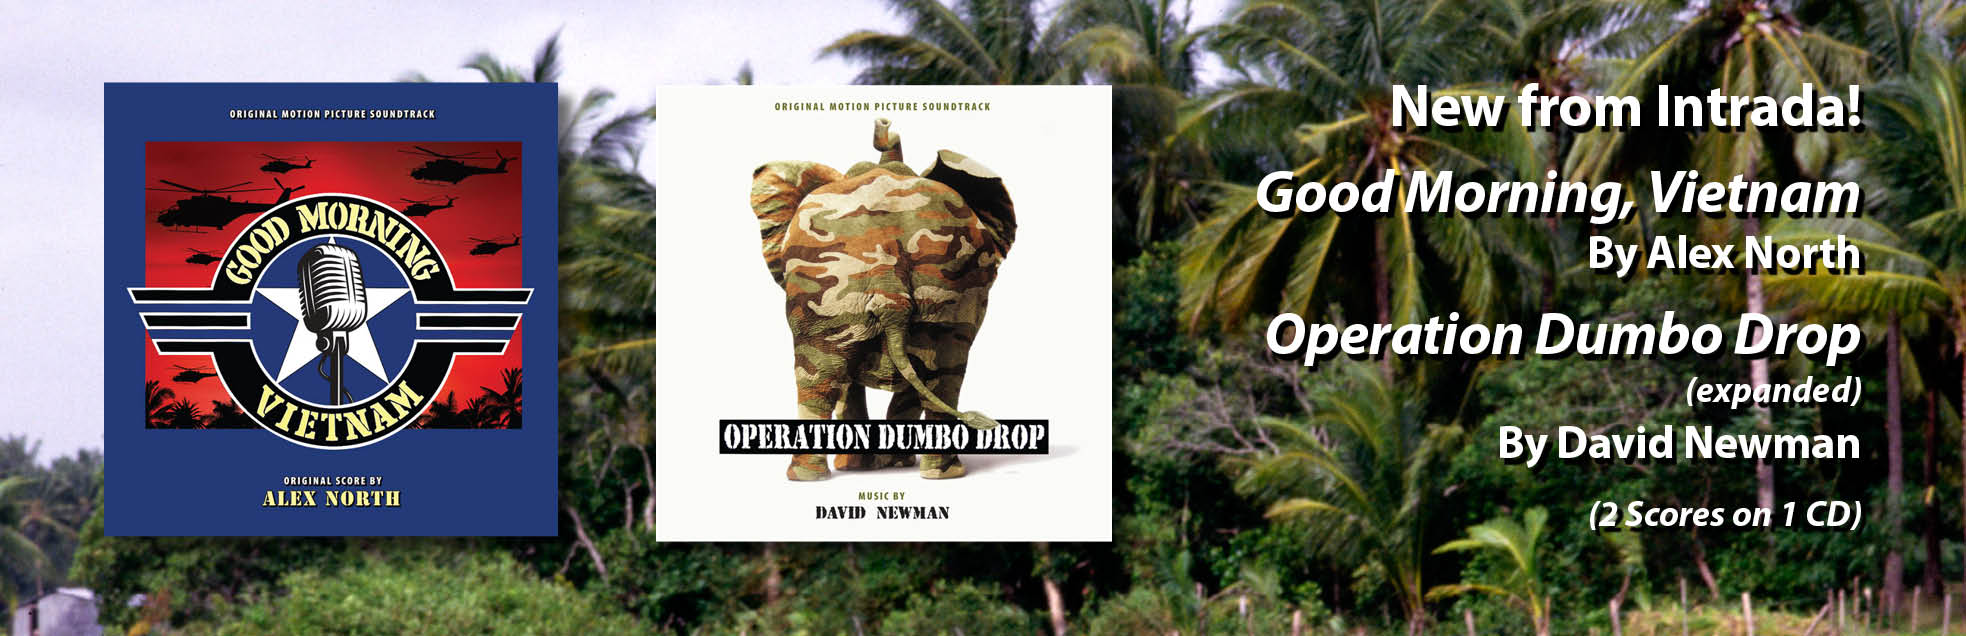 Good Morning Vietnam / Operation Dumbo Drop